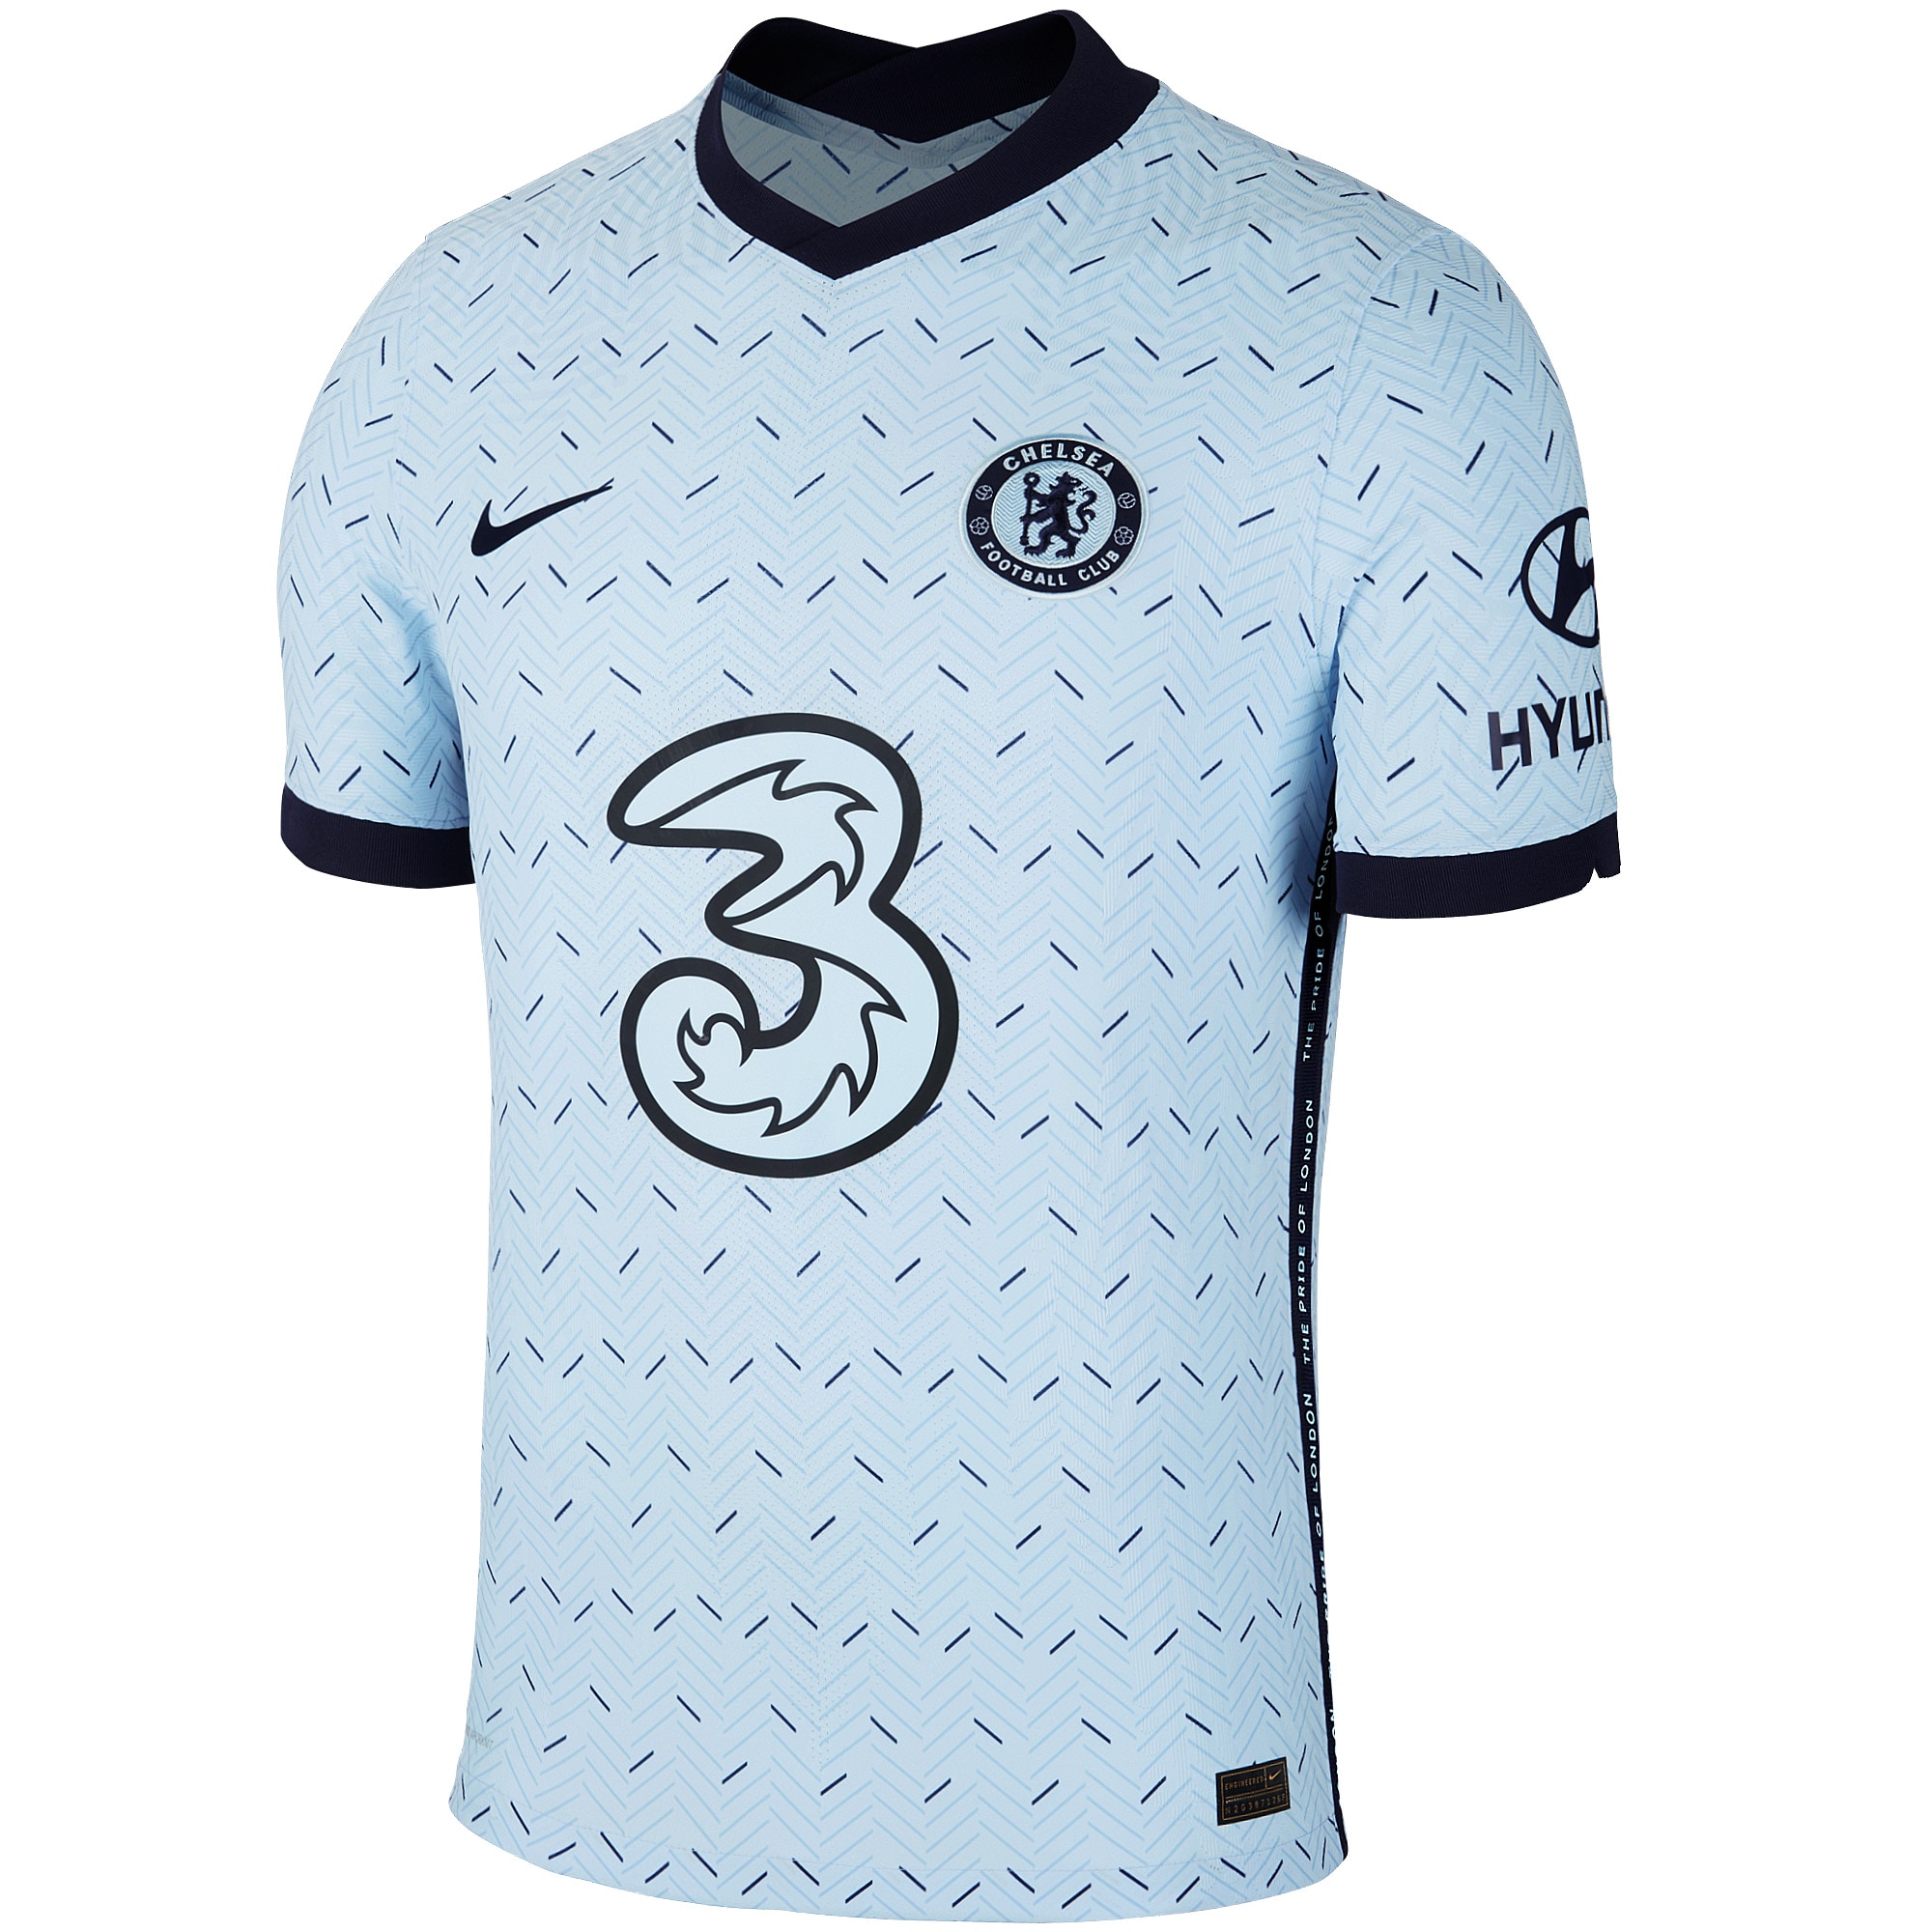 Pre-owned Nike Chelsea Away Vapor Match Shirt 2020-21 Jersey Light Blue/black